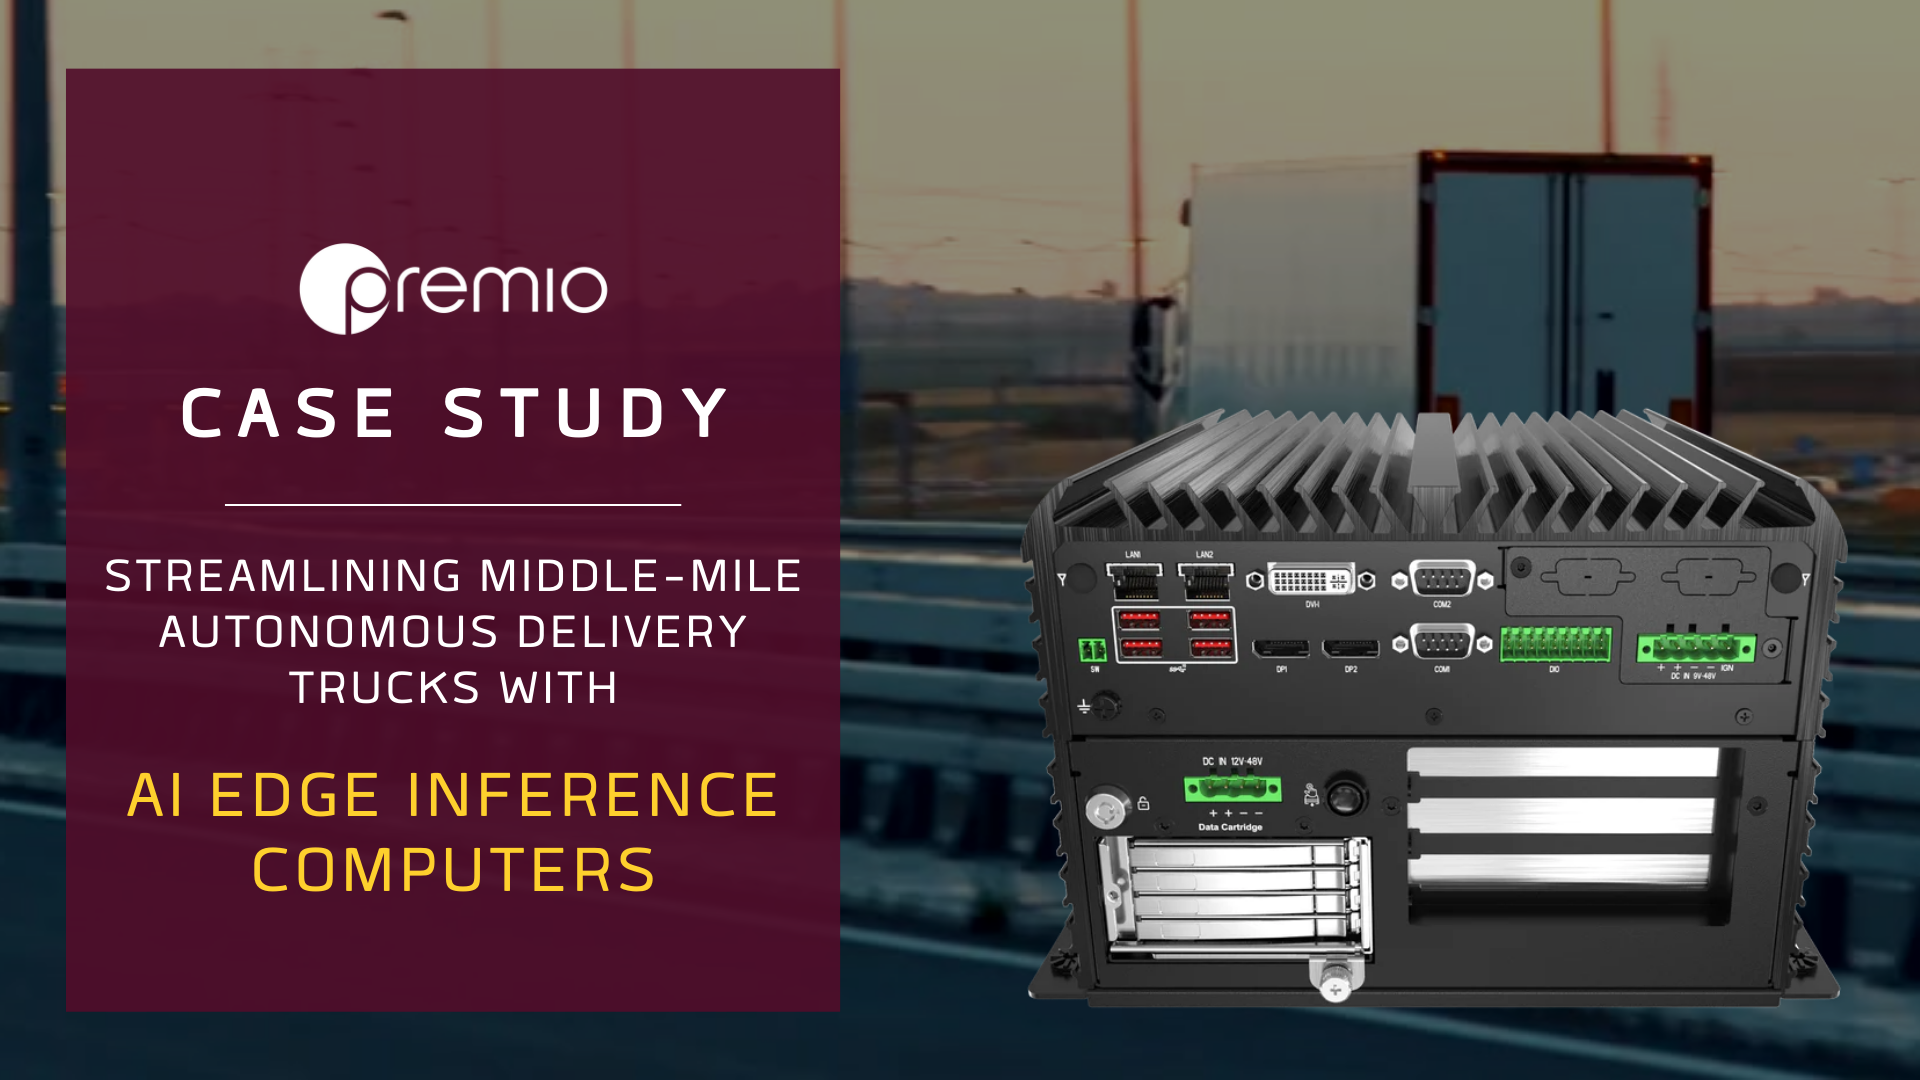 premio case study autonomous delivery truck for middle mile logistics with AI Edge Inference Computer